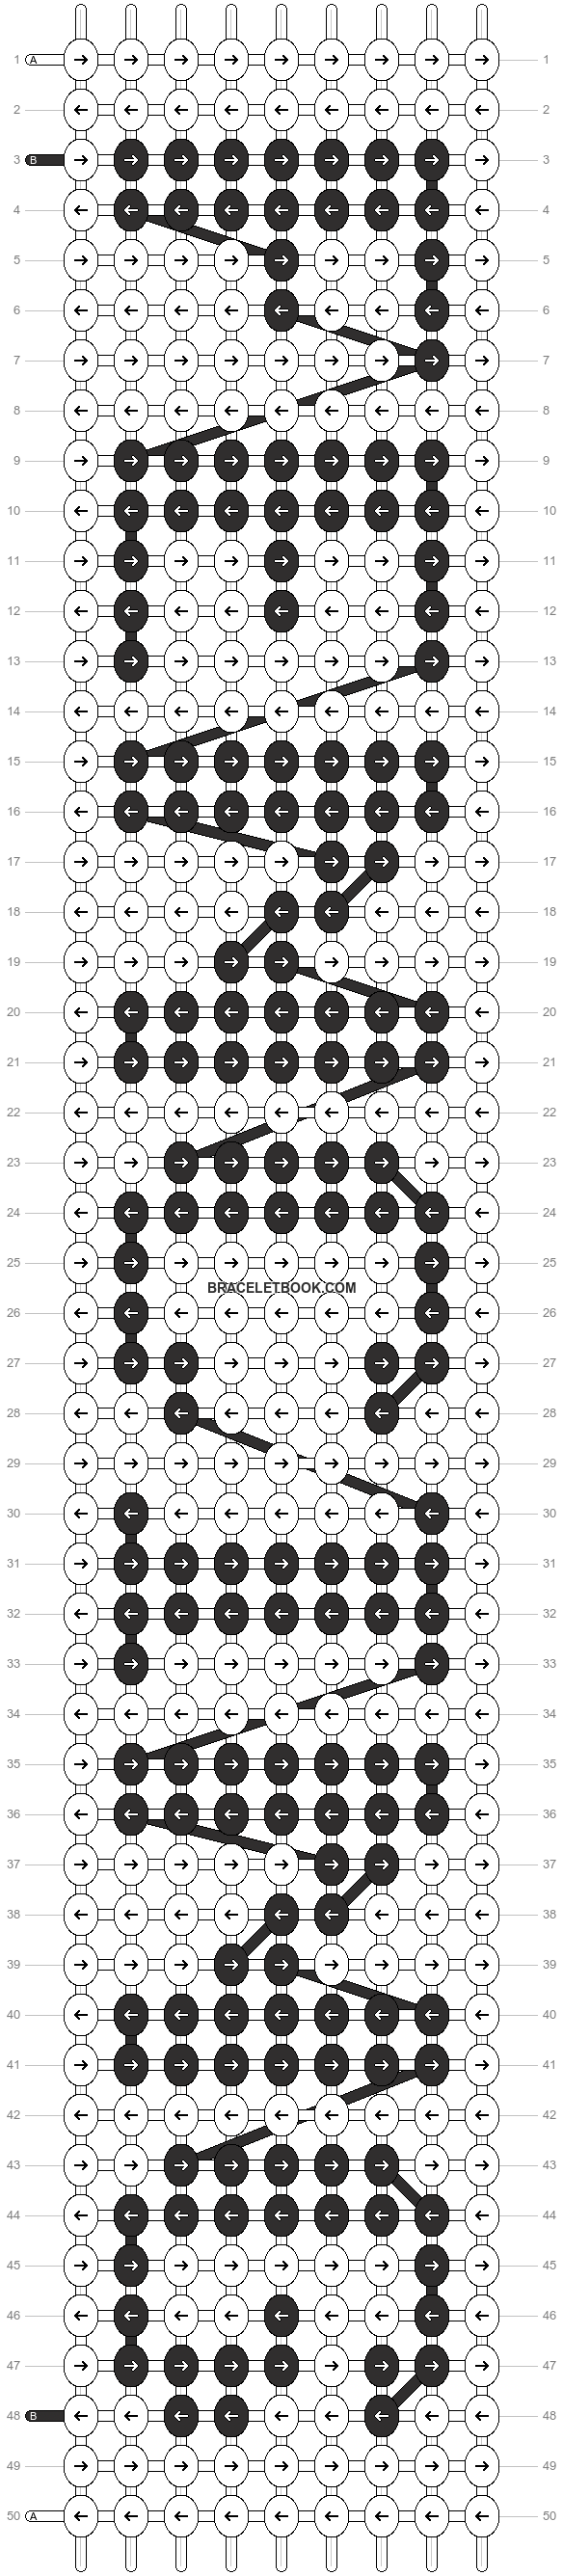 Alpha pattern #6600 pattern